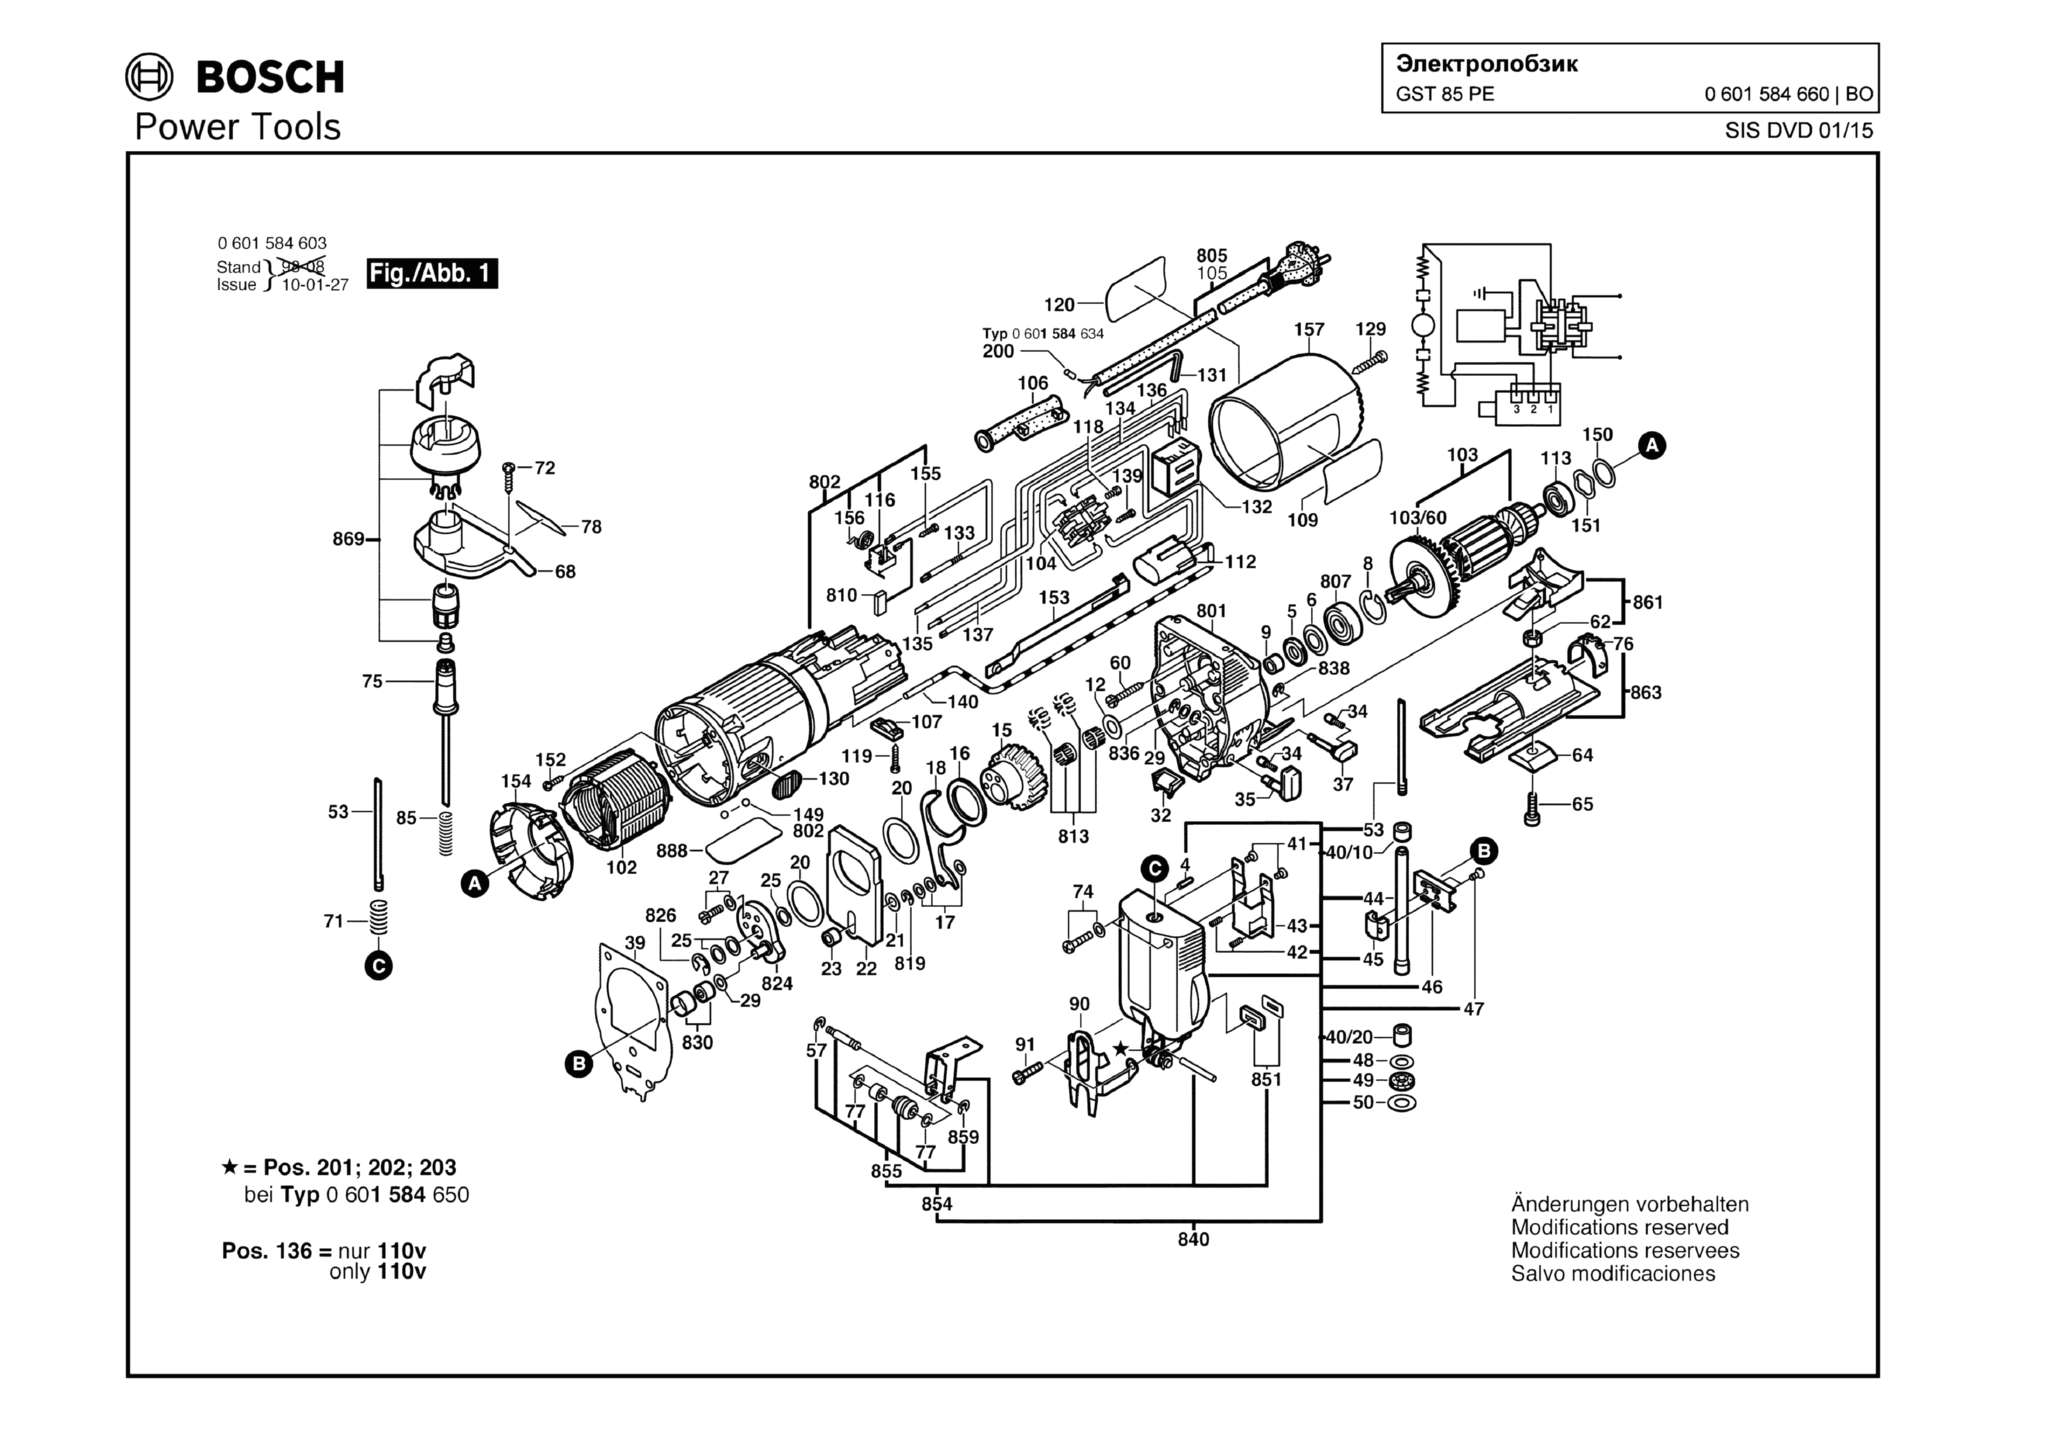 Запчасти, схема и деталировка Bosch GST 85 PE (ТИП 0601584660)